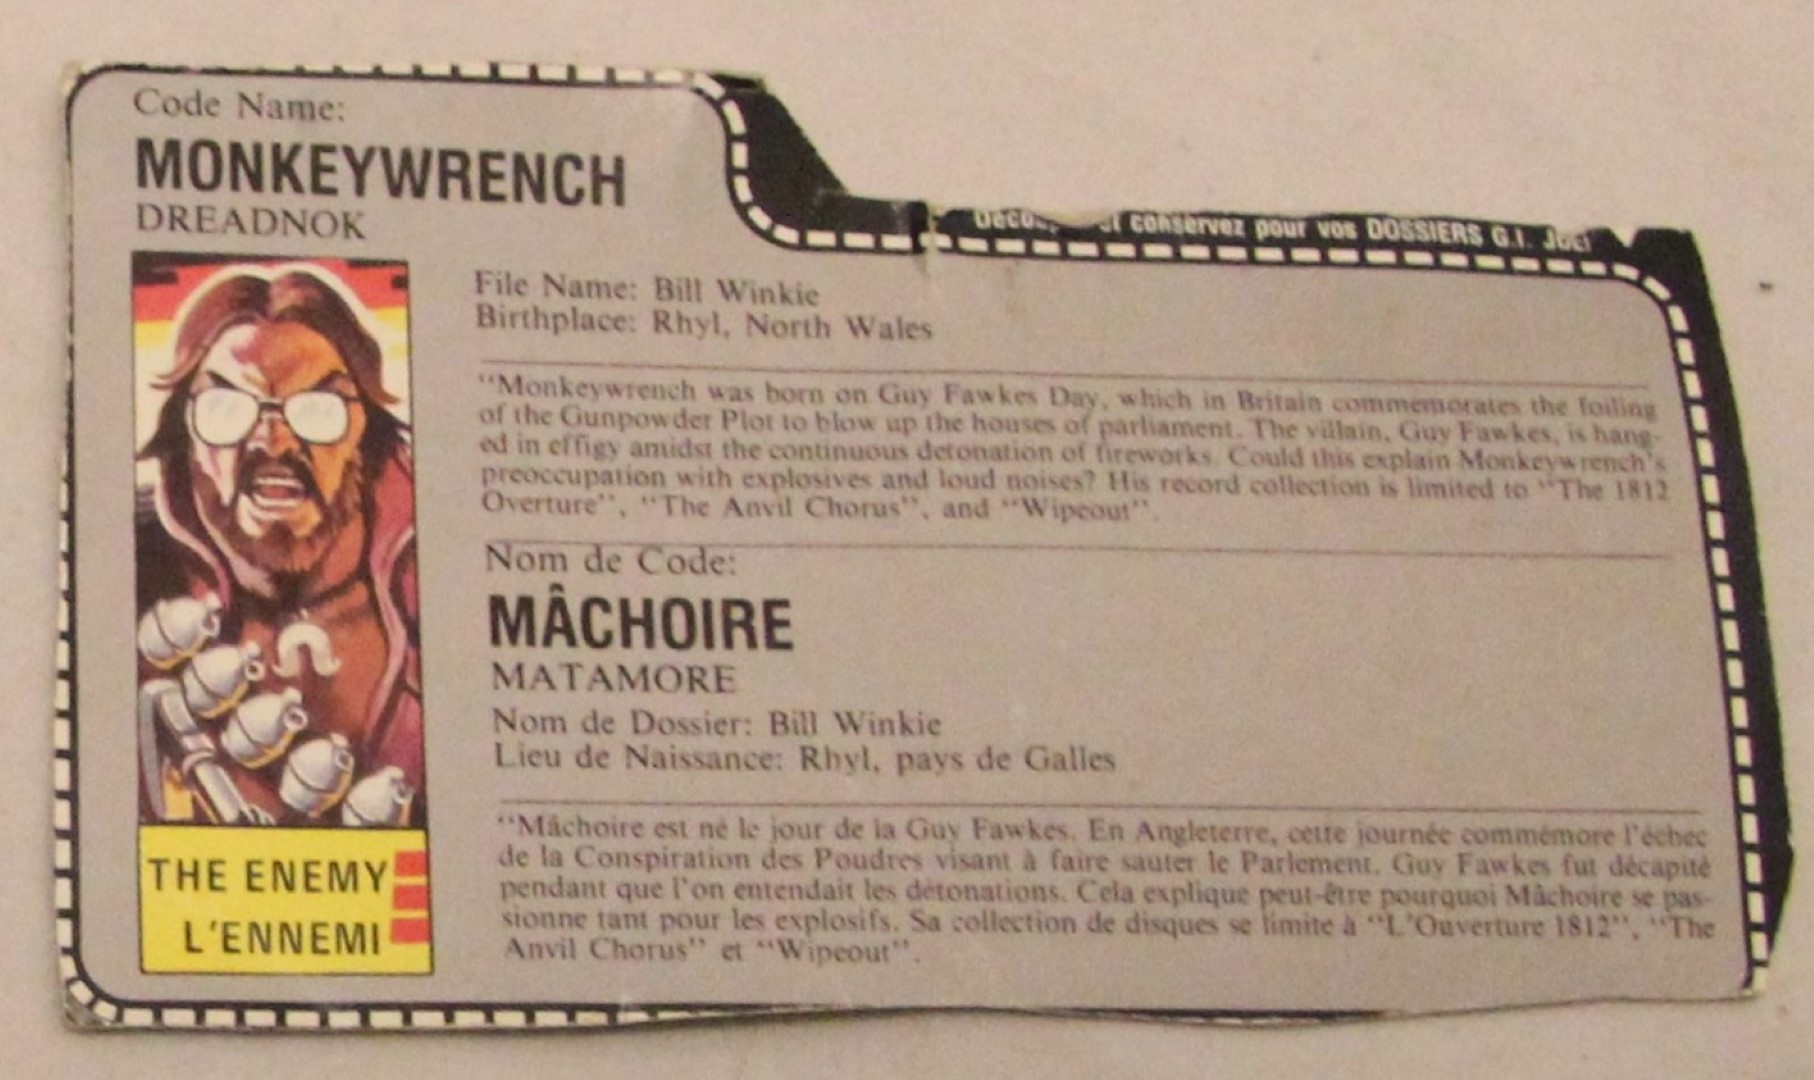 1986 Monkeywrench file card